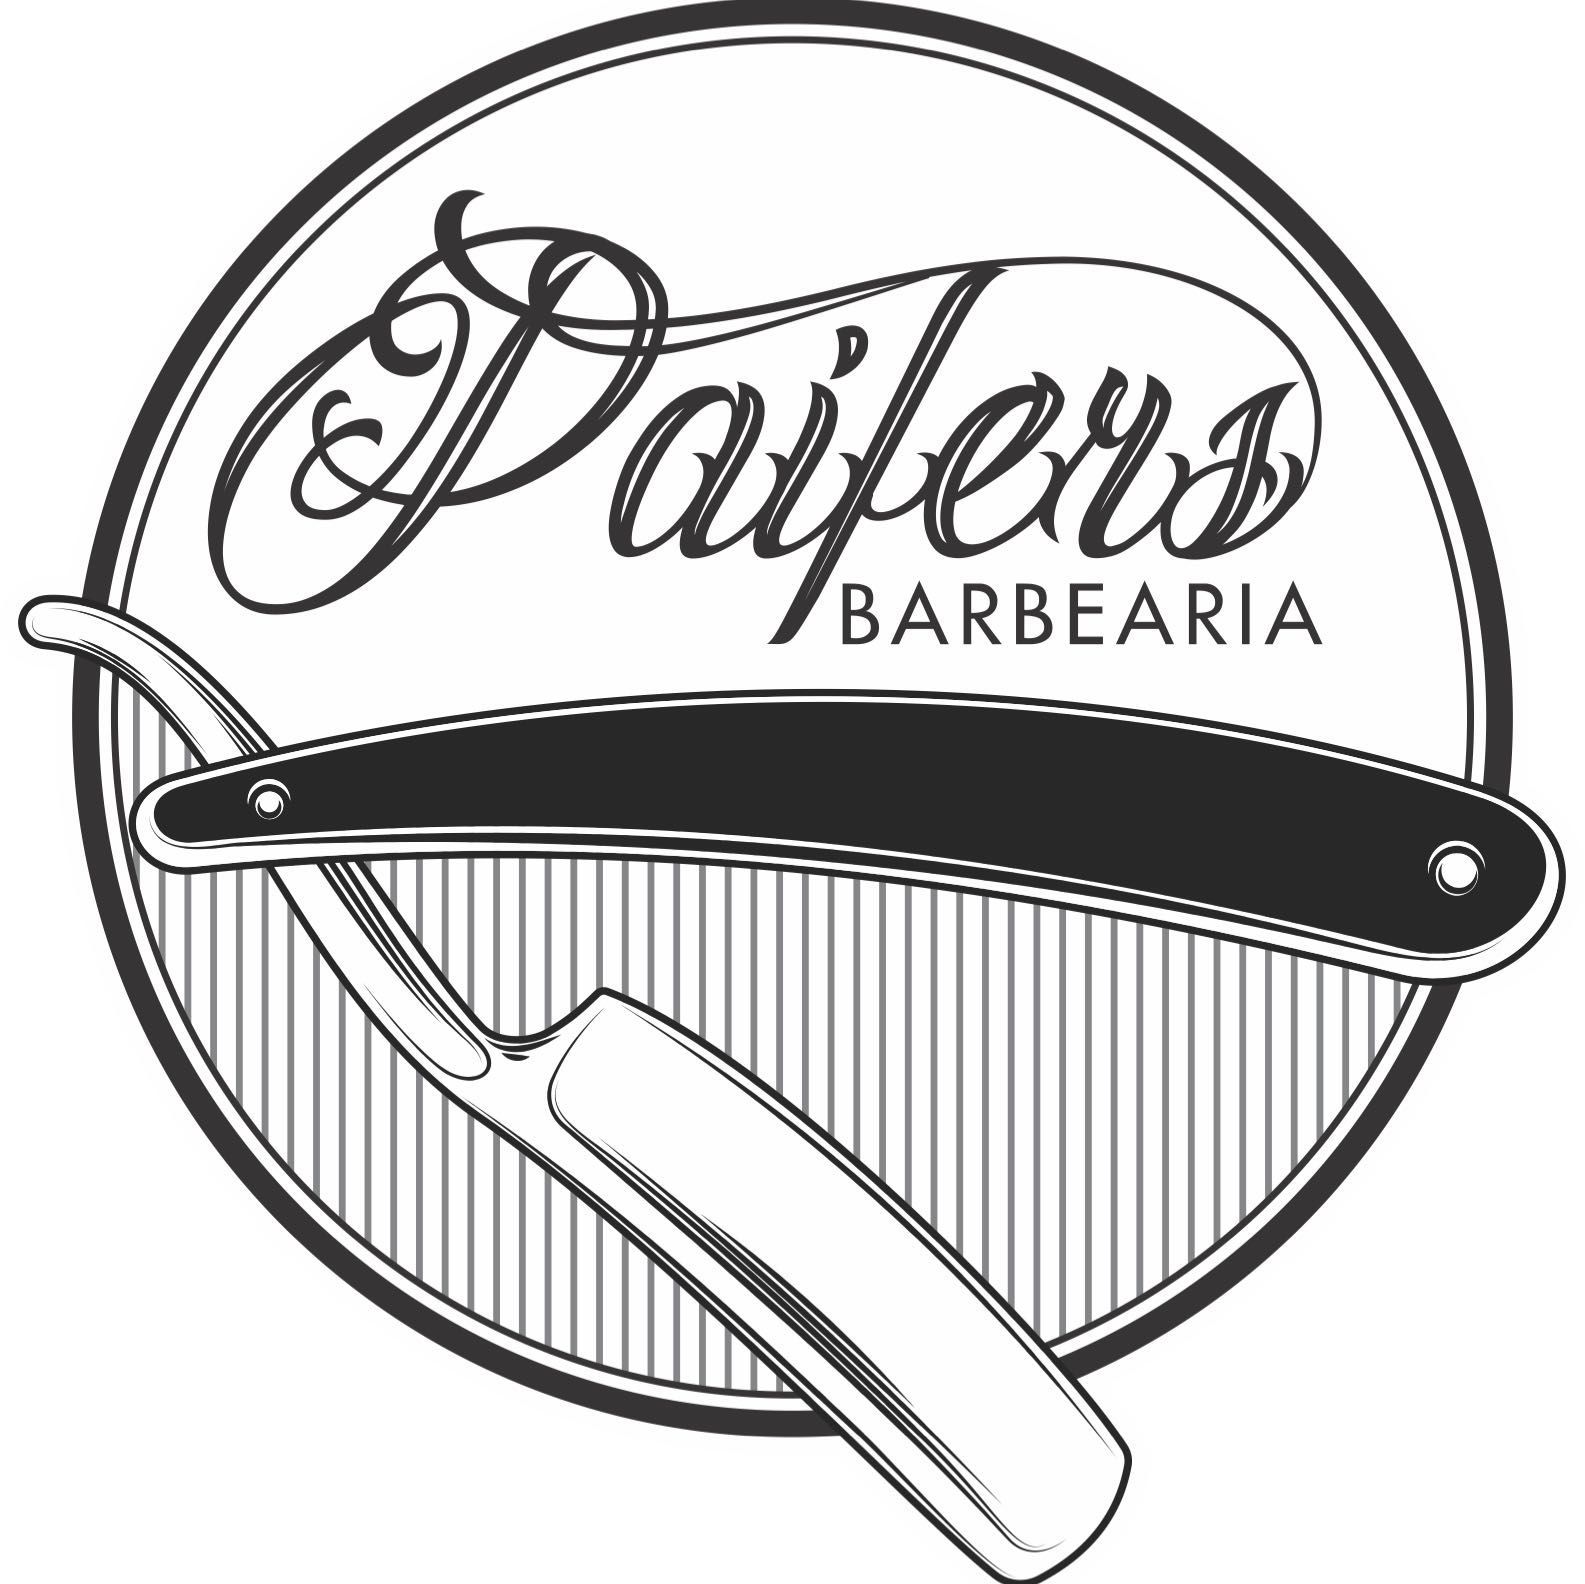 Paifers Barbearia, Avenida Jacupiranga, 29, 07244-170, Guarulhos